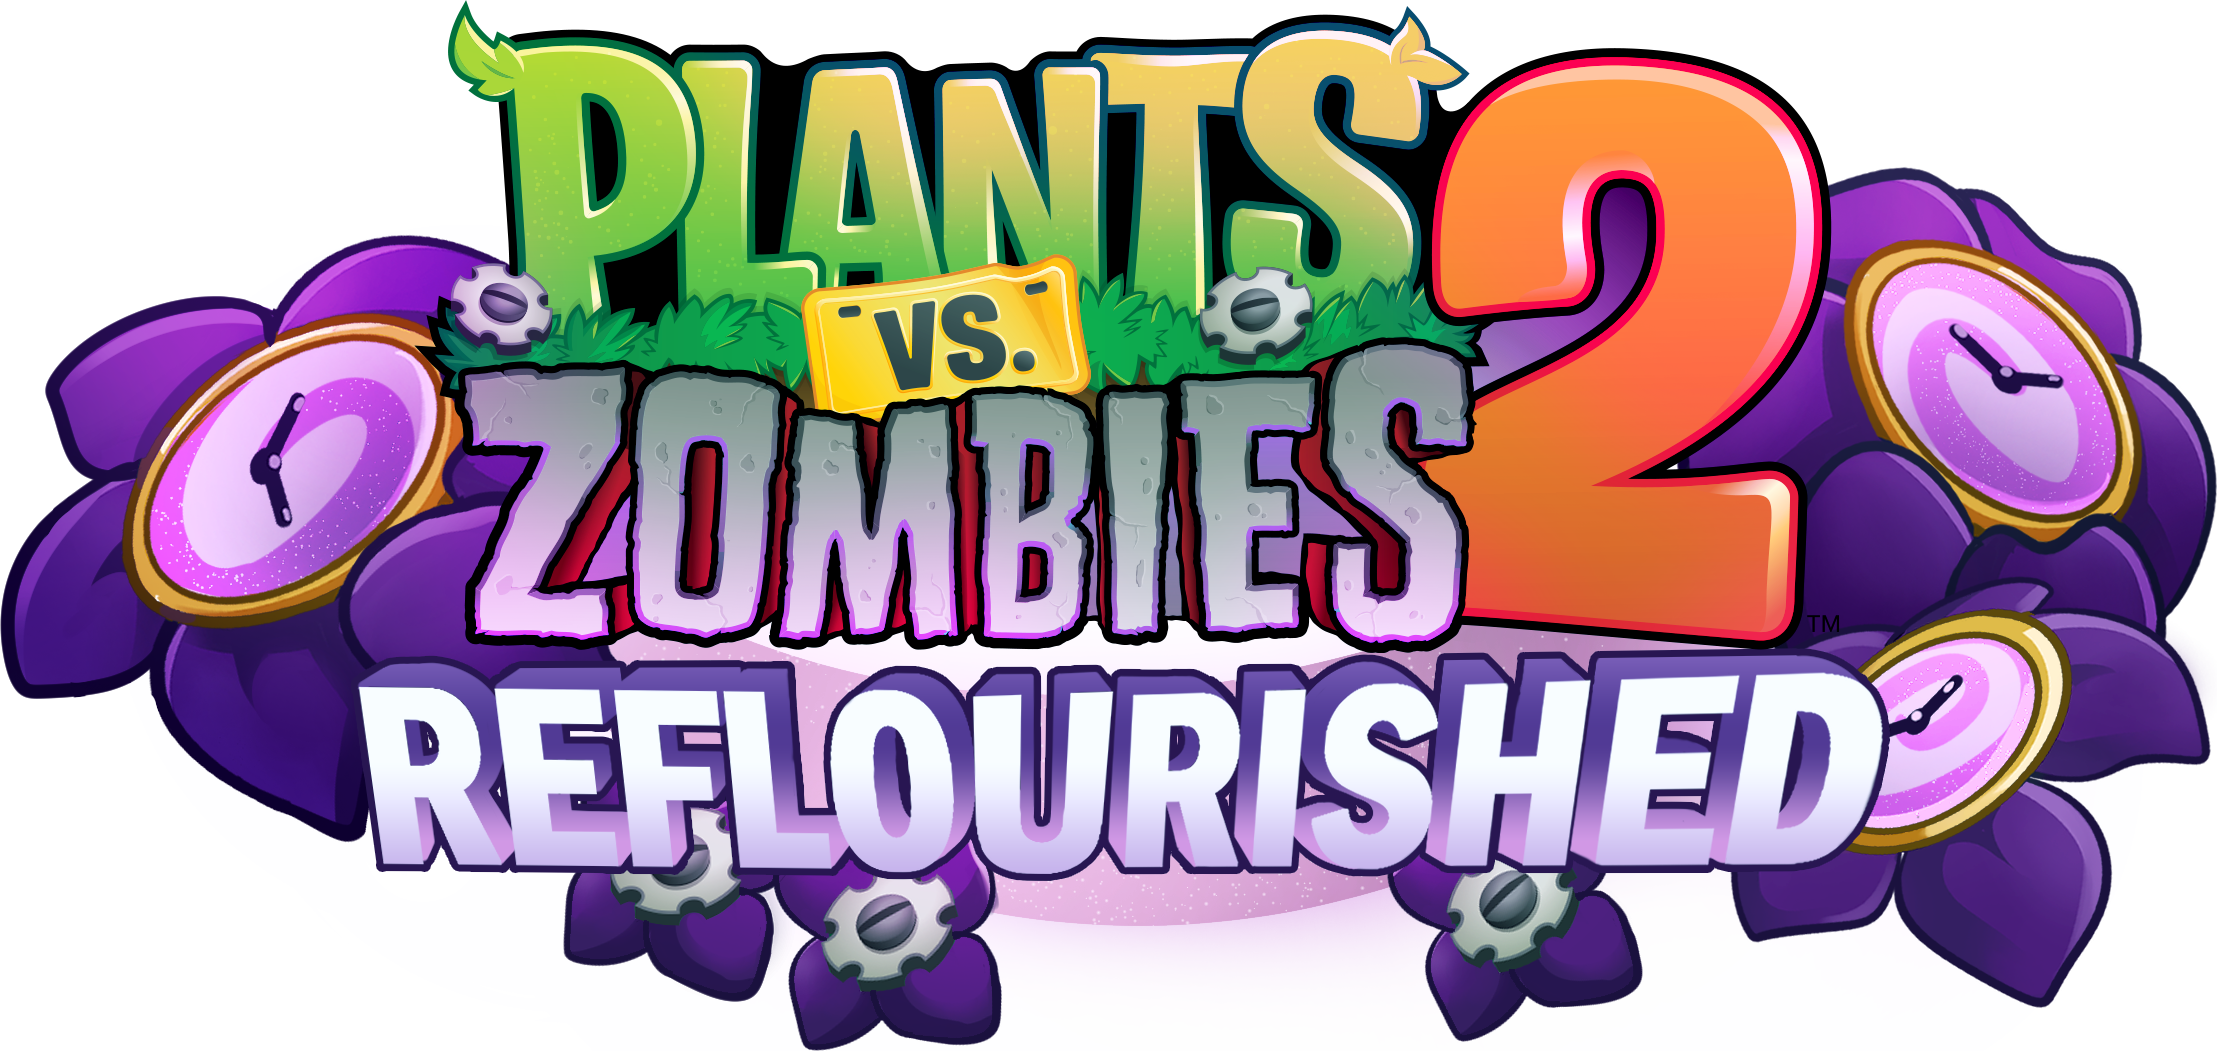 Installation Tutorial! - Plants vs. Zombies 2: Reflourished 